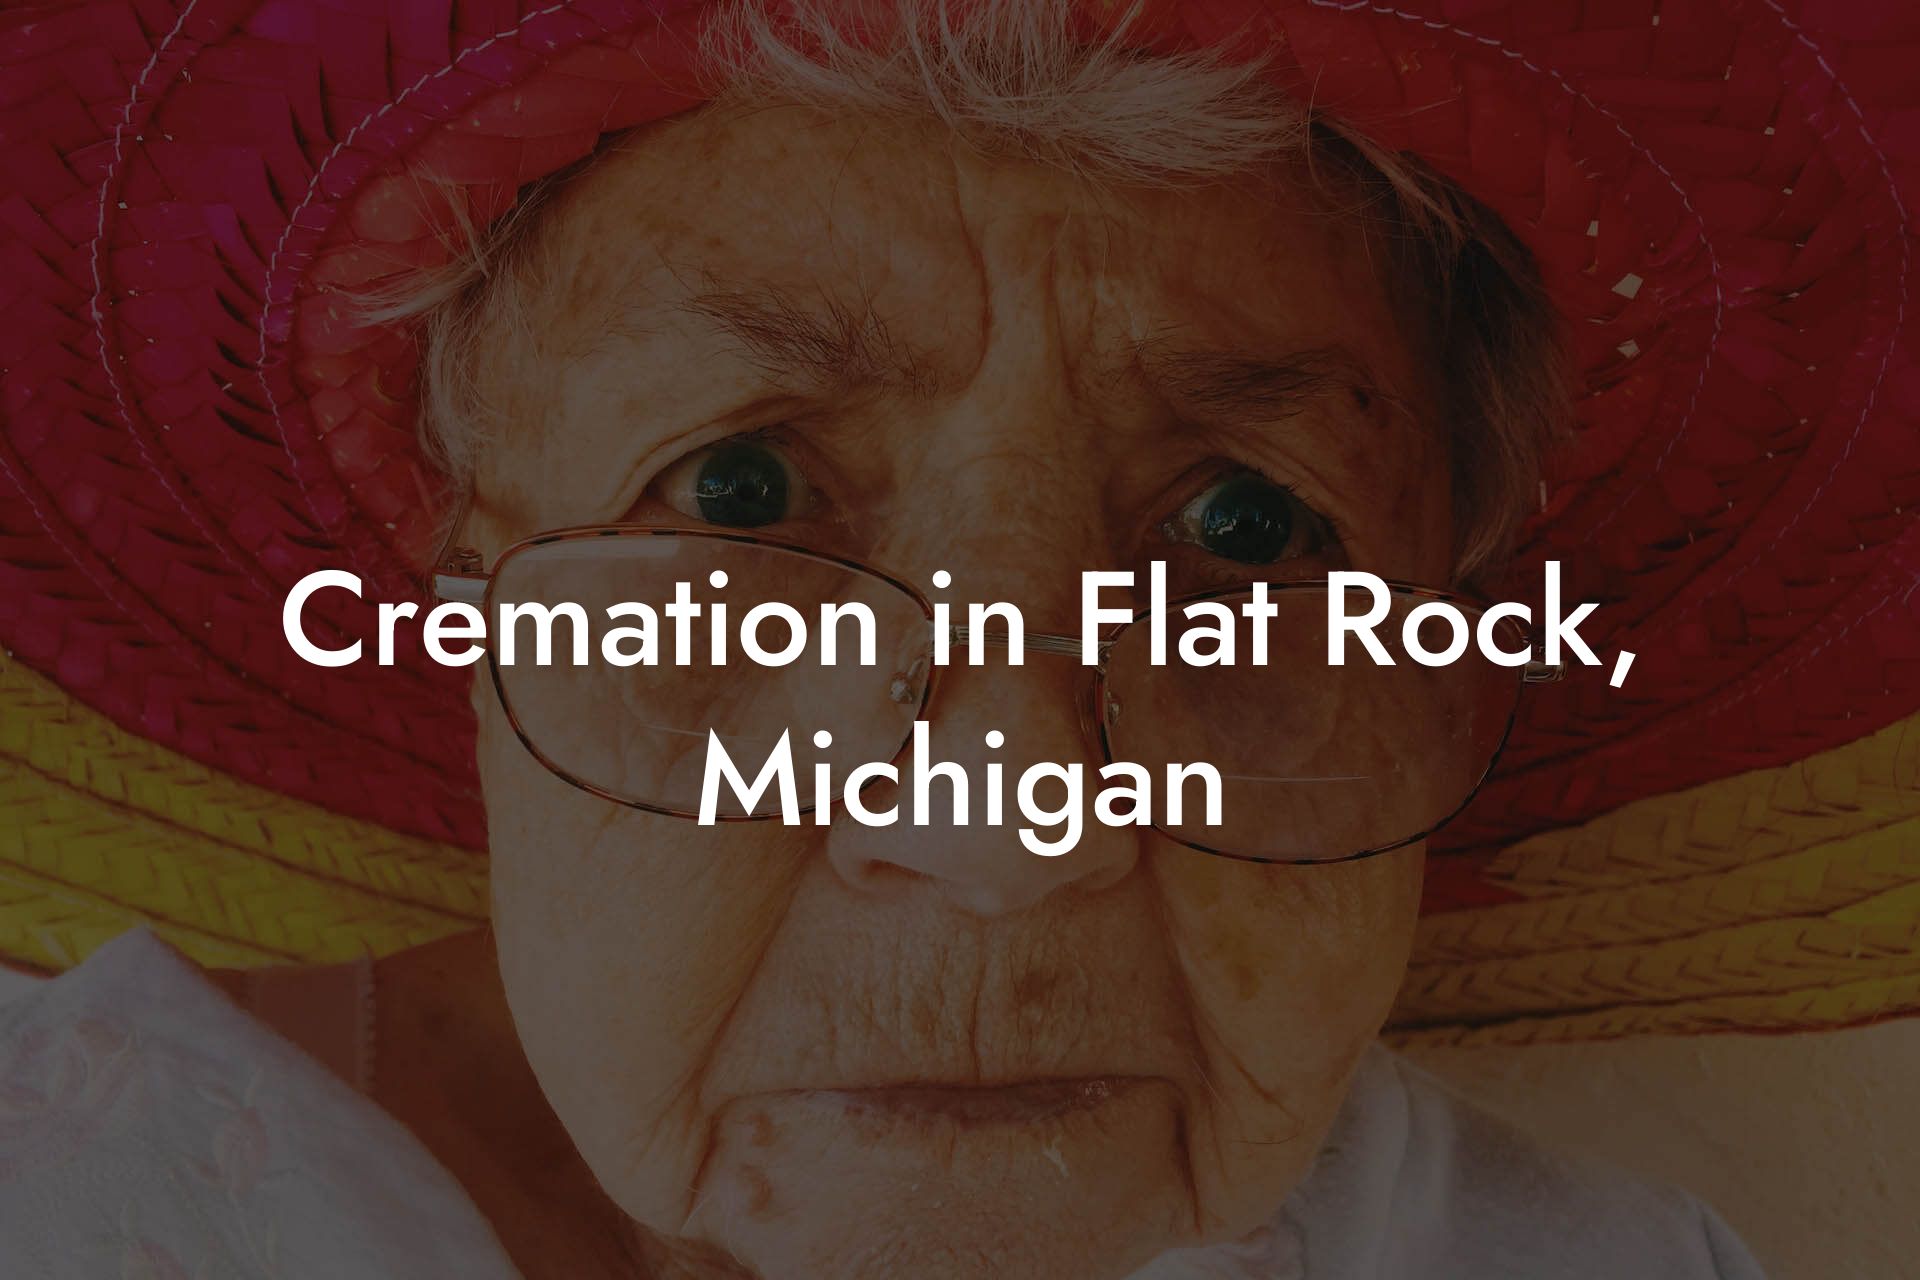 Cremation in Flat Rock, Michigan